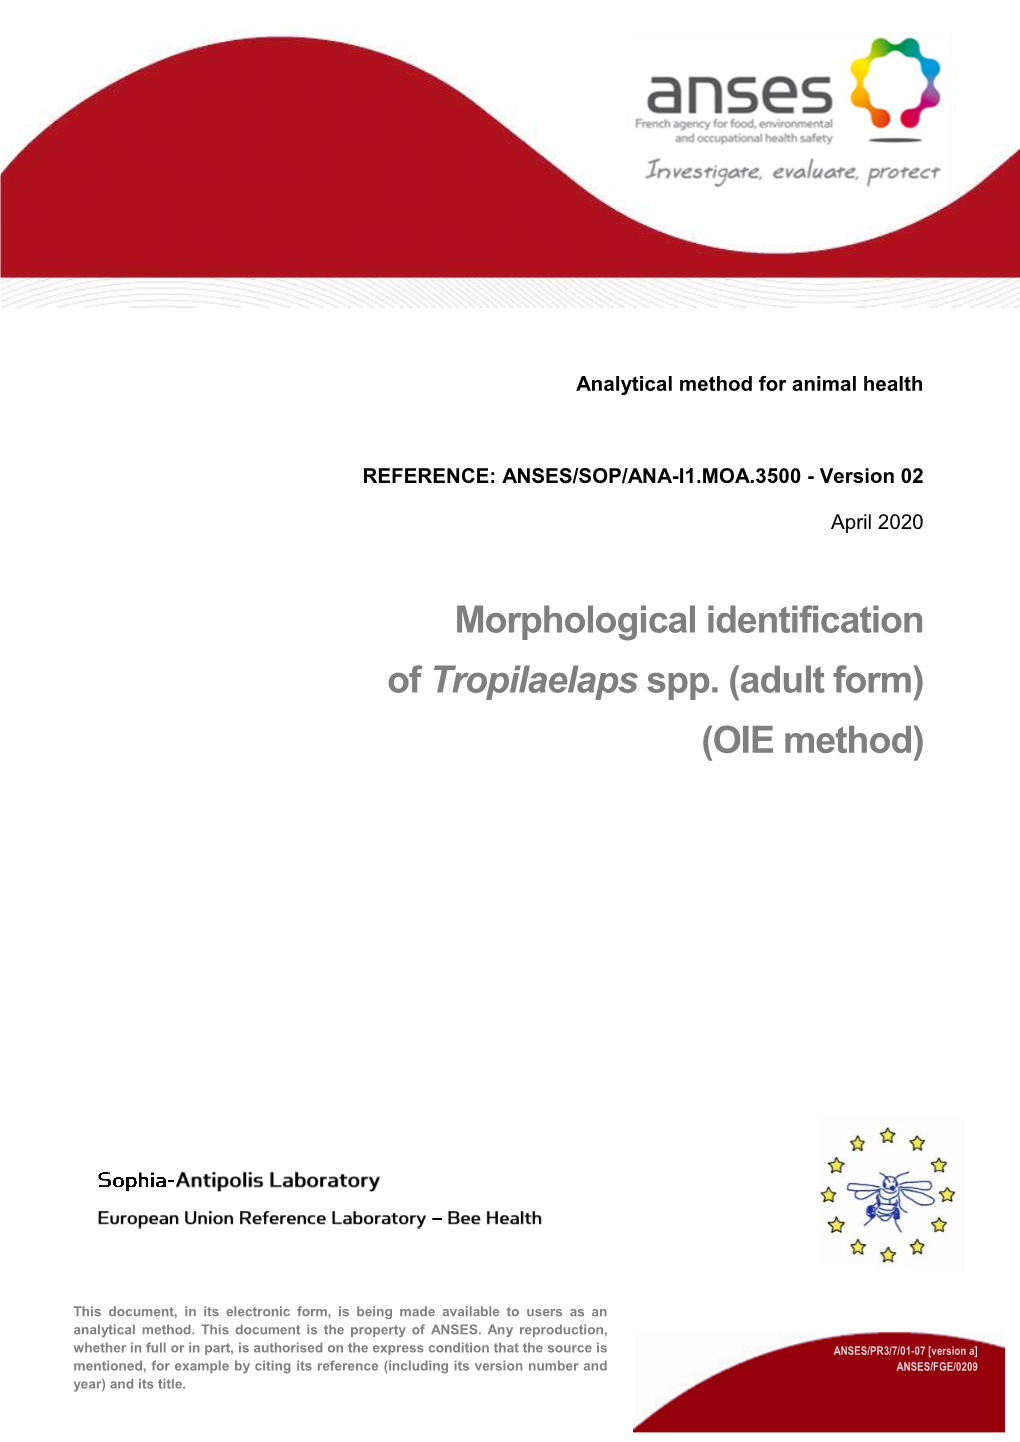 Morphological Identification of Tropilaelaps Spp. (Adult Form) (OIE Method)